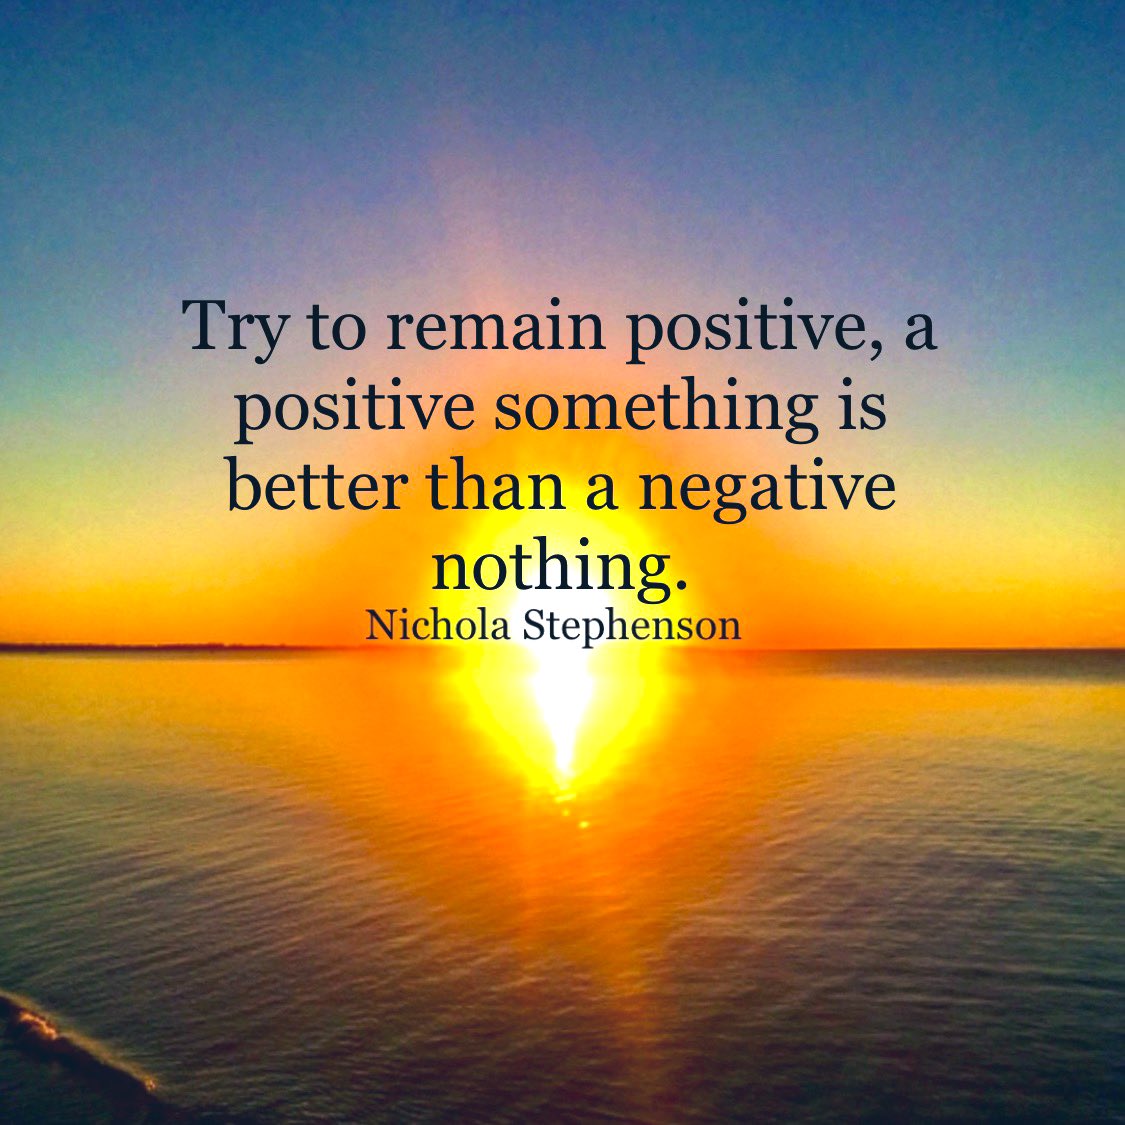 Try to remain positive, a positive something is better than a negative nothing 💥

#positive #mentalhealth #mindset #joytrain #successtrain #thinkbigsundaywithmarsha #thrivetogether 
#PositiveMindset #energy